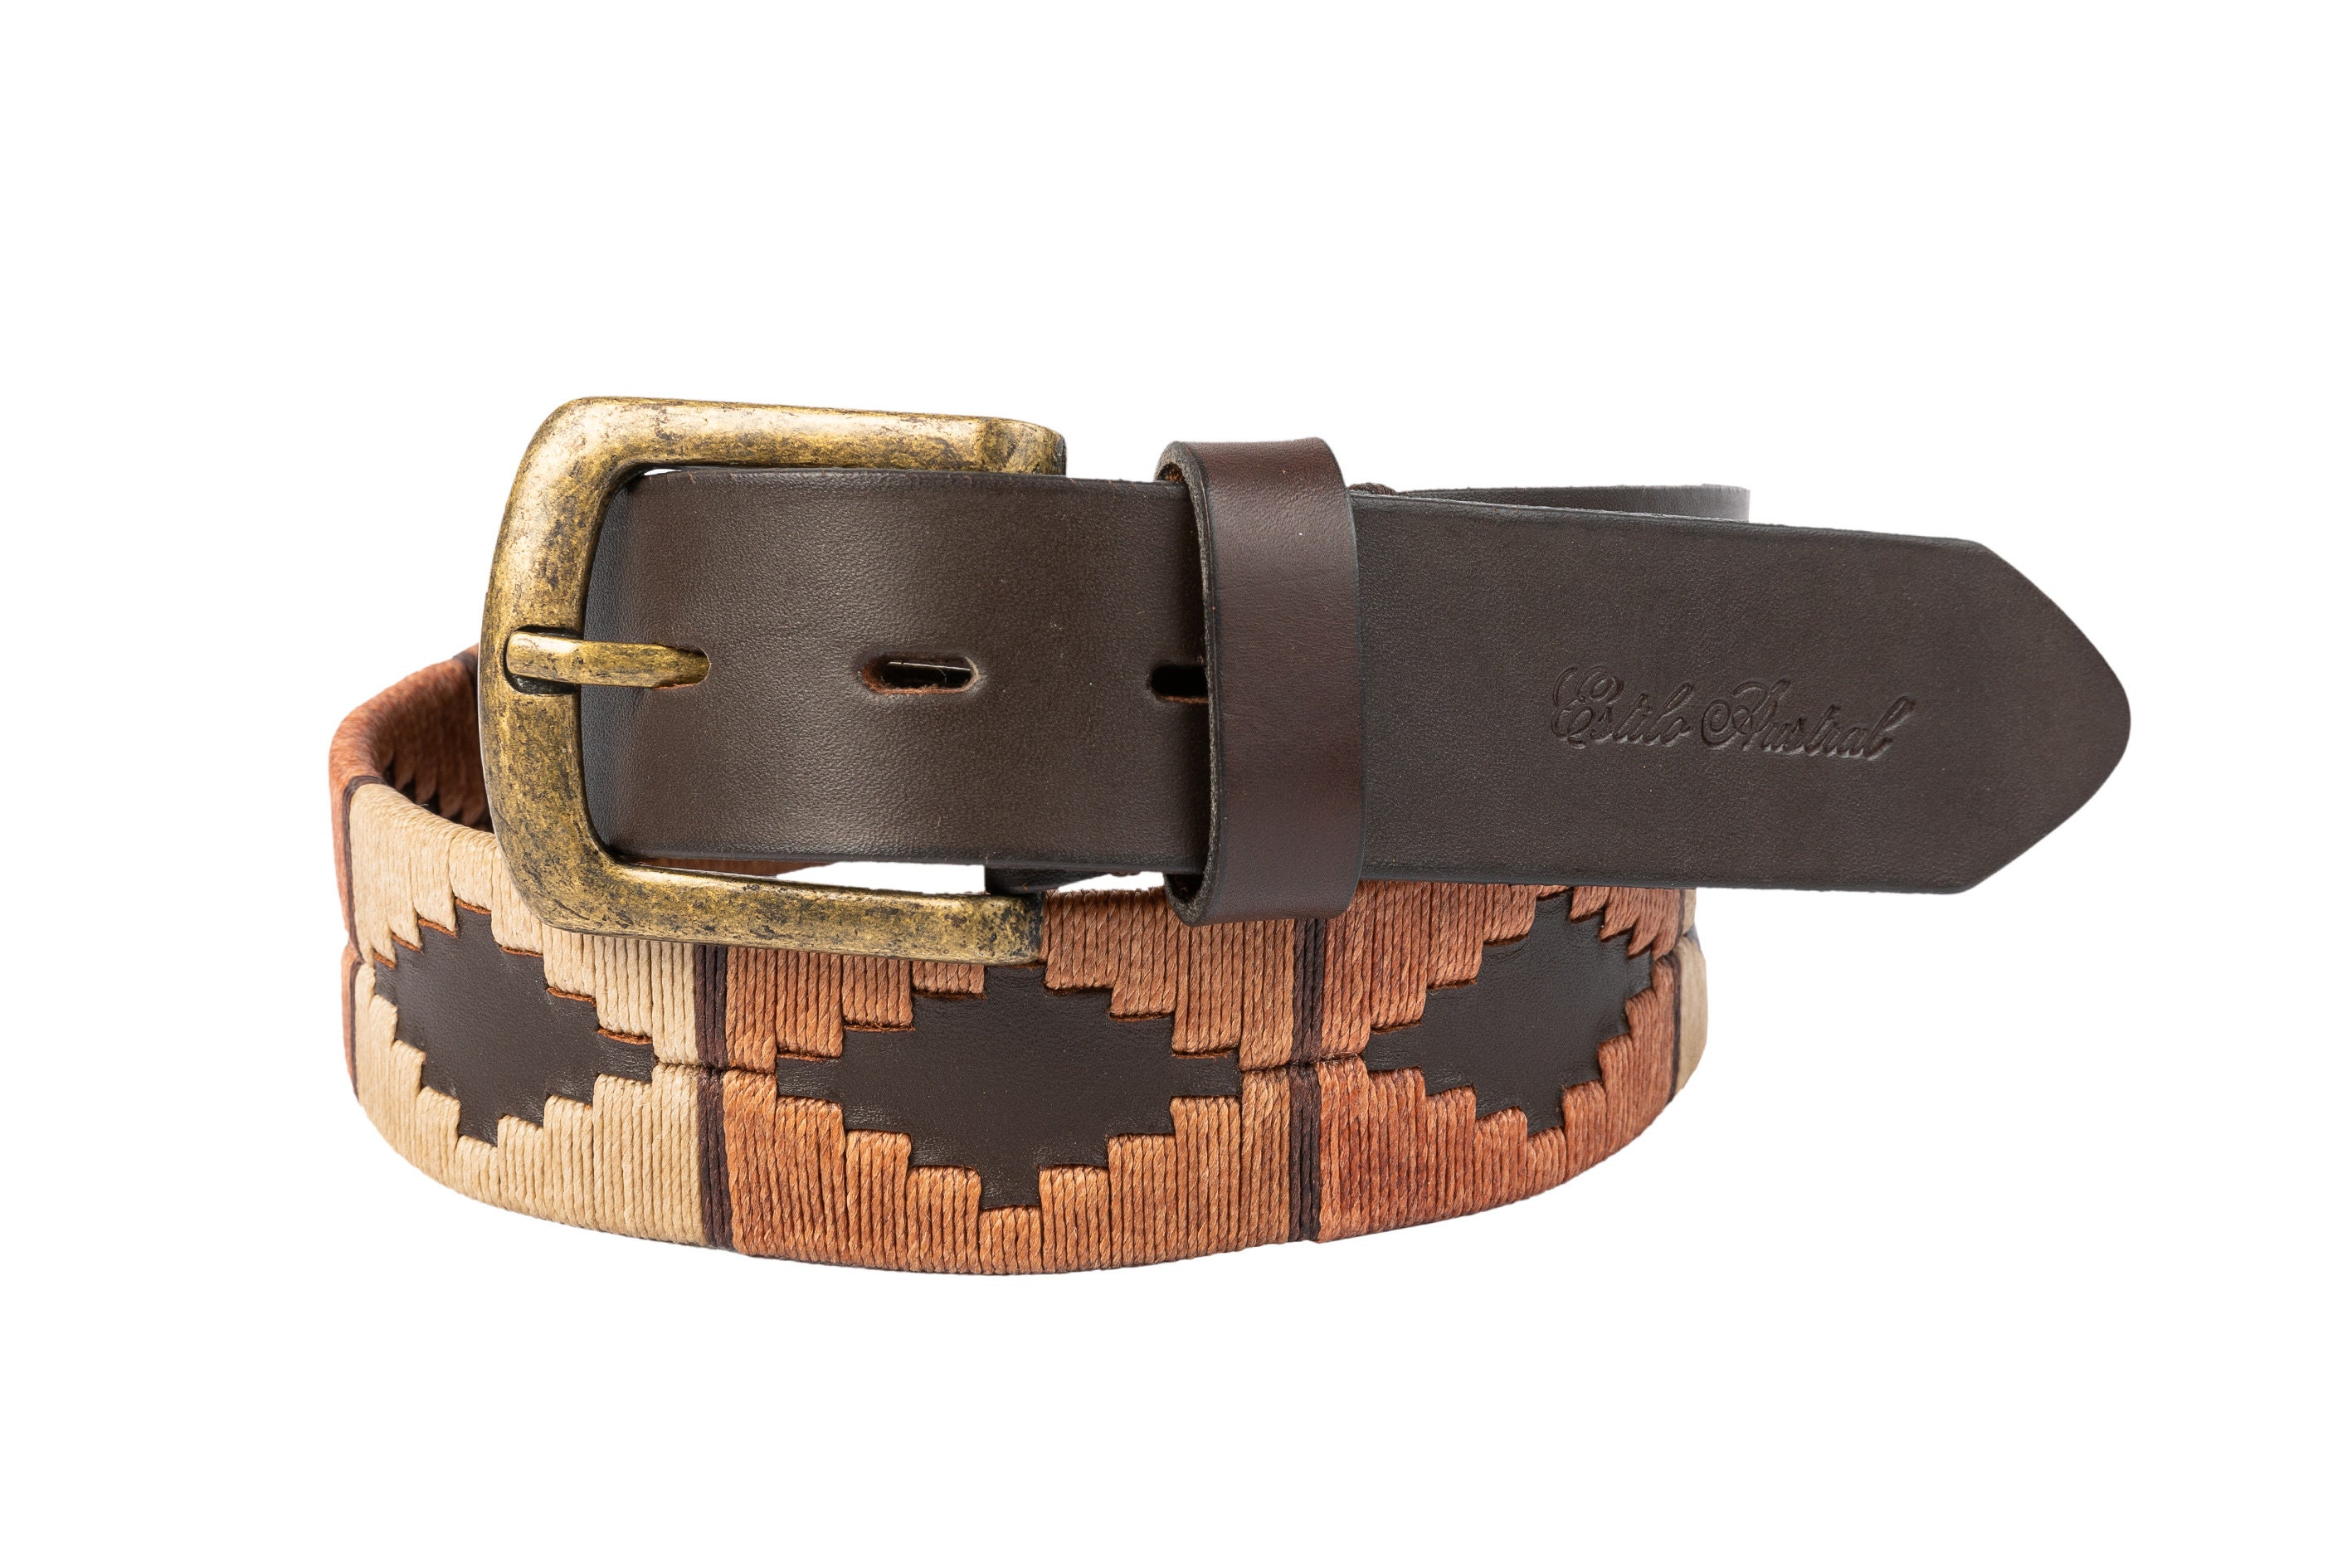 Argentine Handamade belt for men 100% leather. Pampa Guard | Etsy